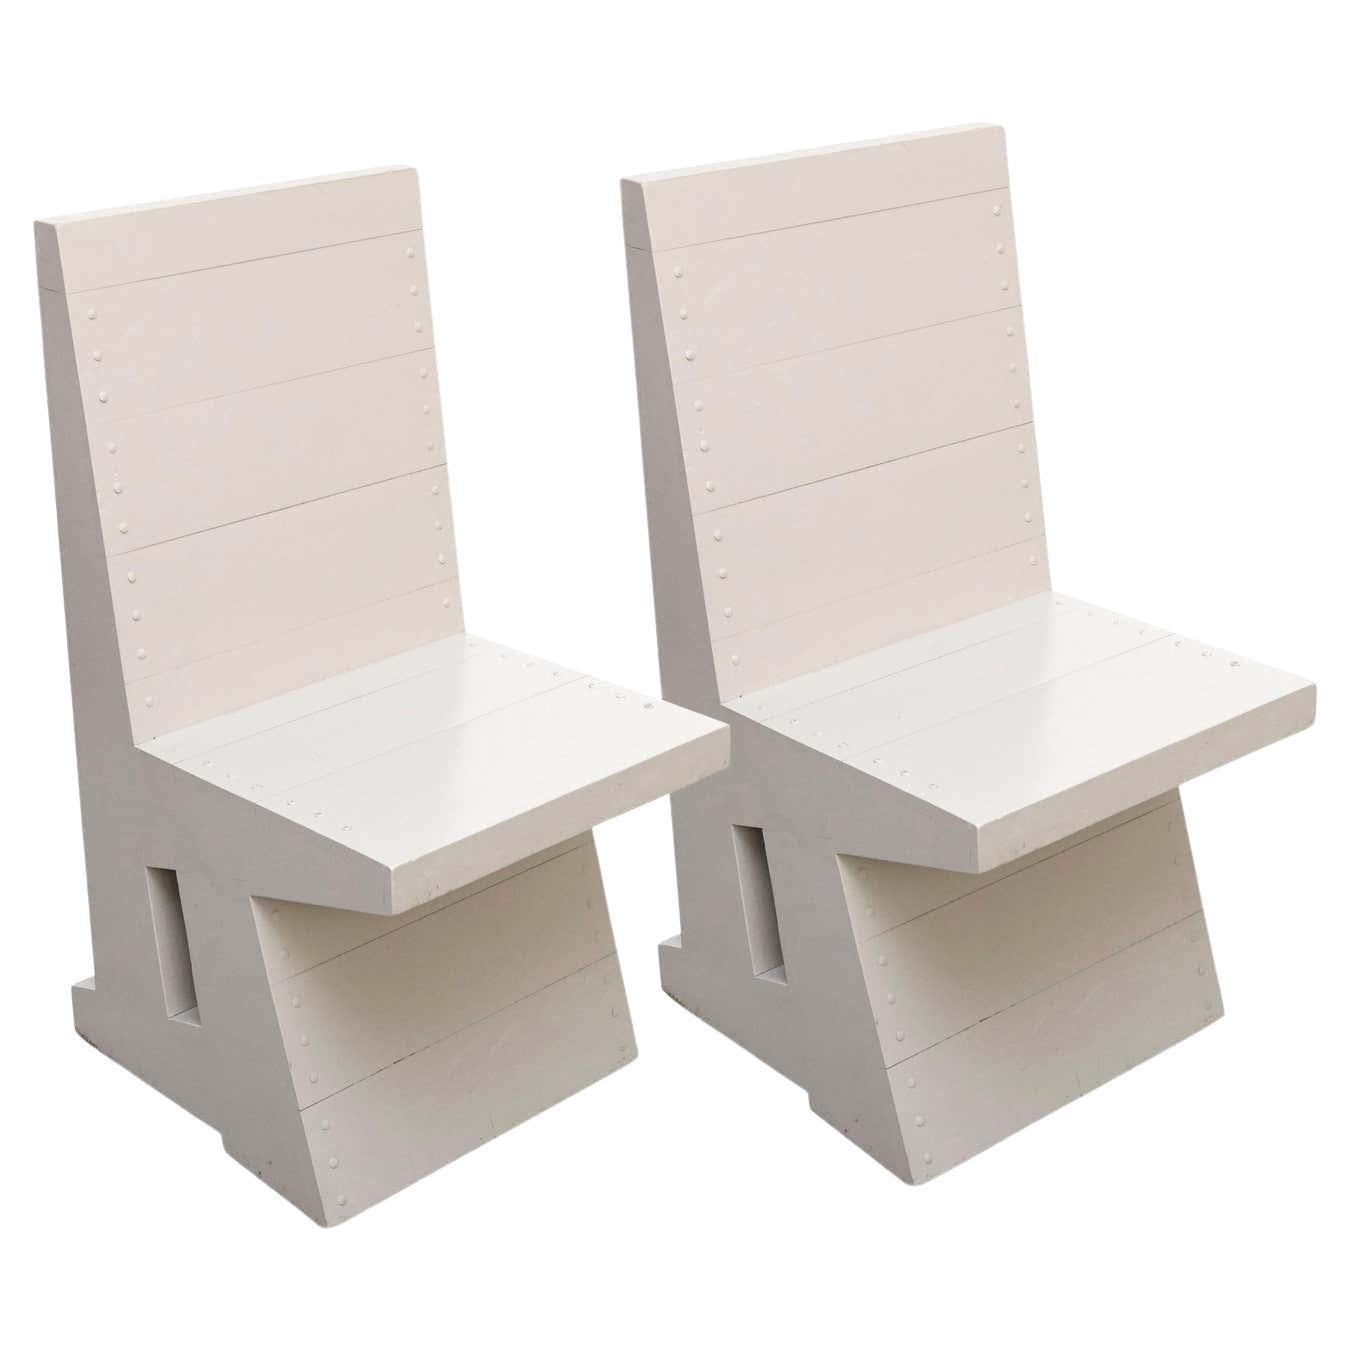 Rare Pair of Dom Hans van der Laan Easy Grey Wood Chairs For Sale